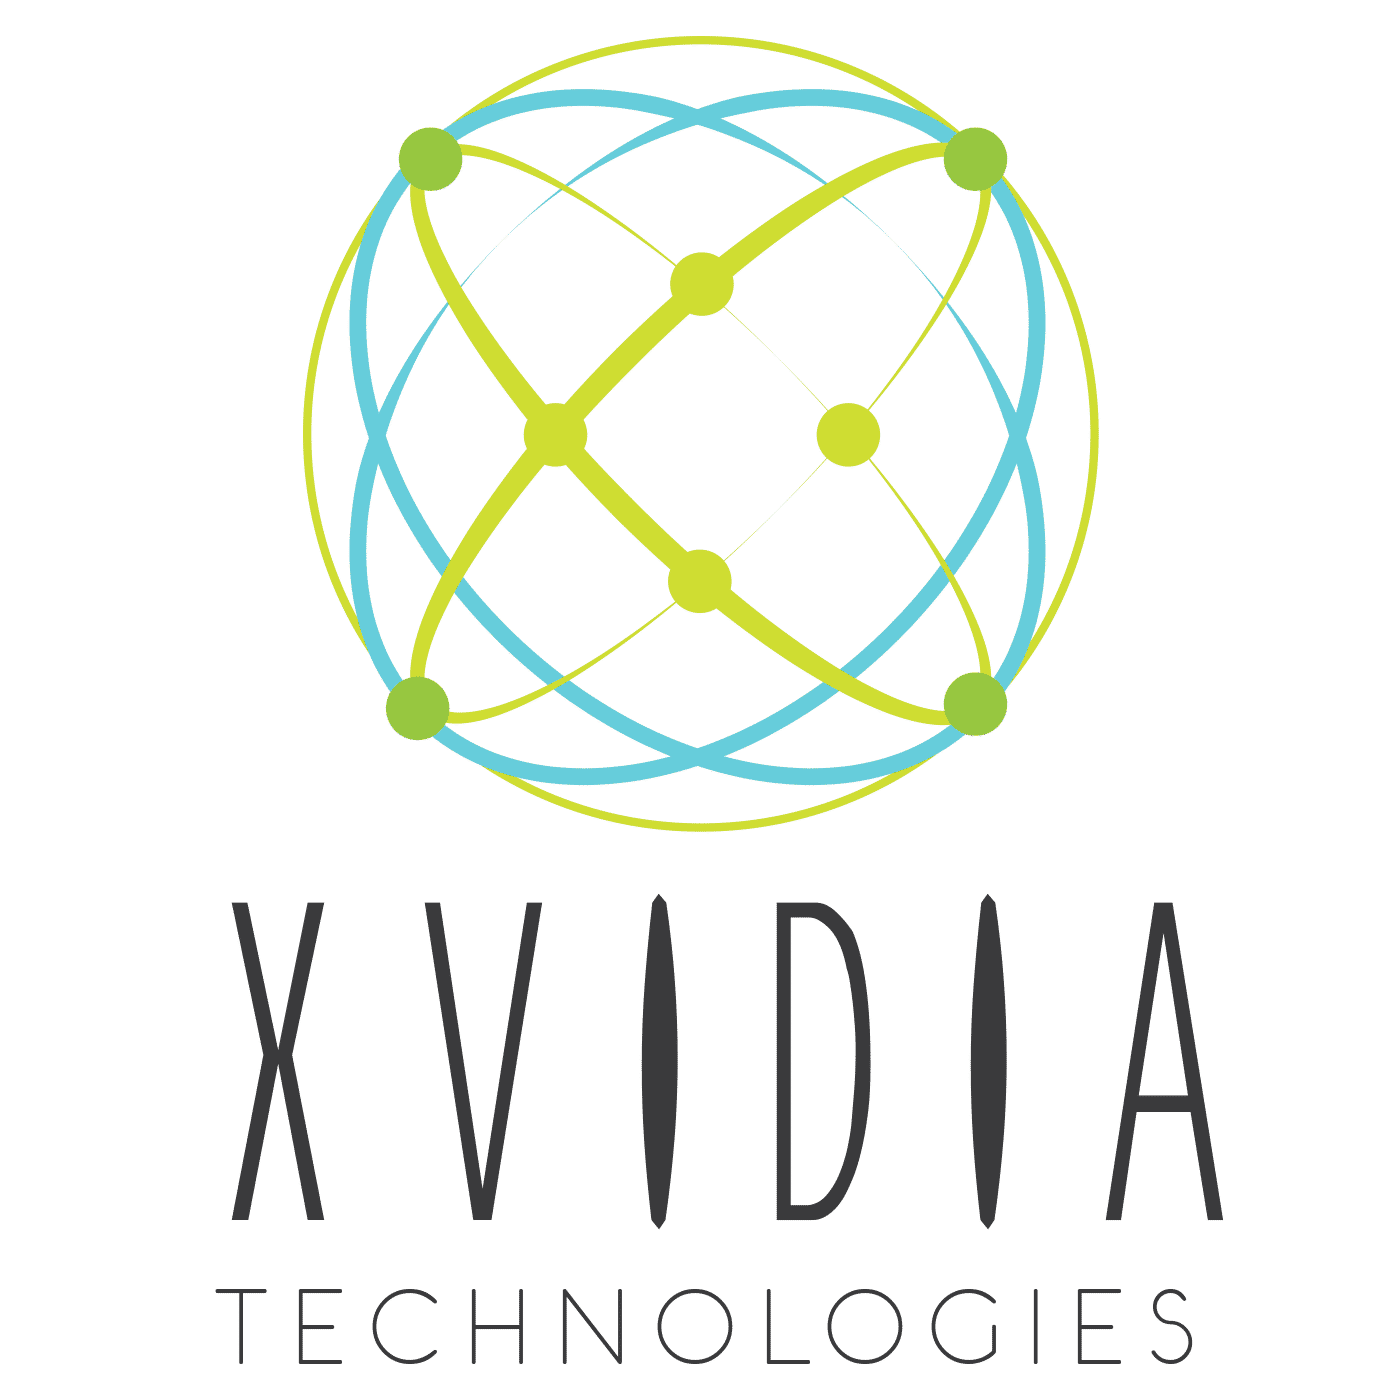 Xvidia Technologies - Crunchbase Company Profile & Funding